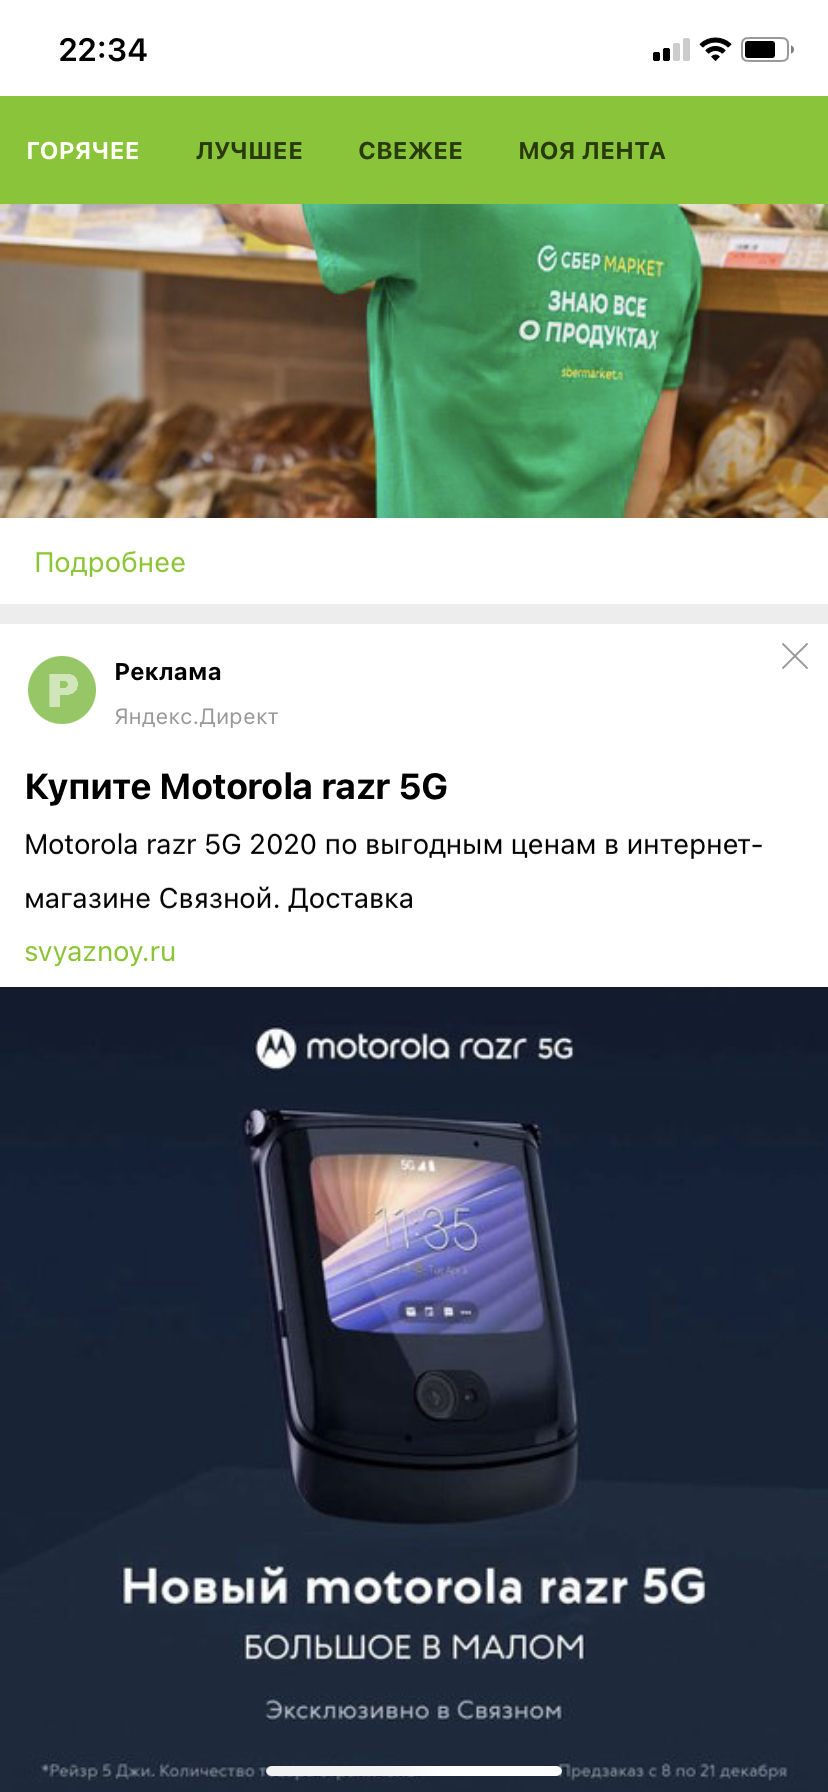 Haven't you gone nuts? - Advertising, Garbage, Yandex., Longpost